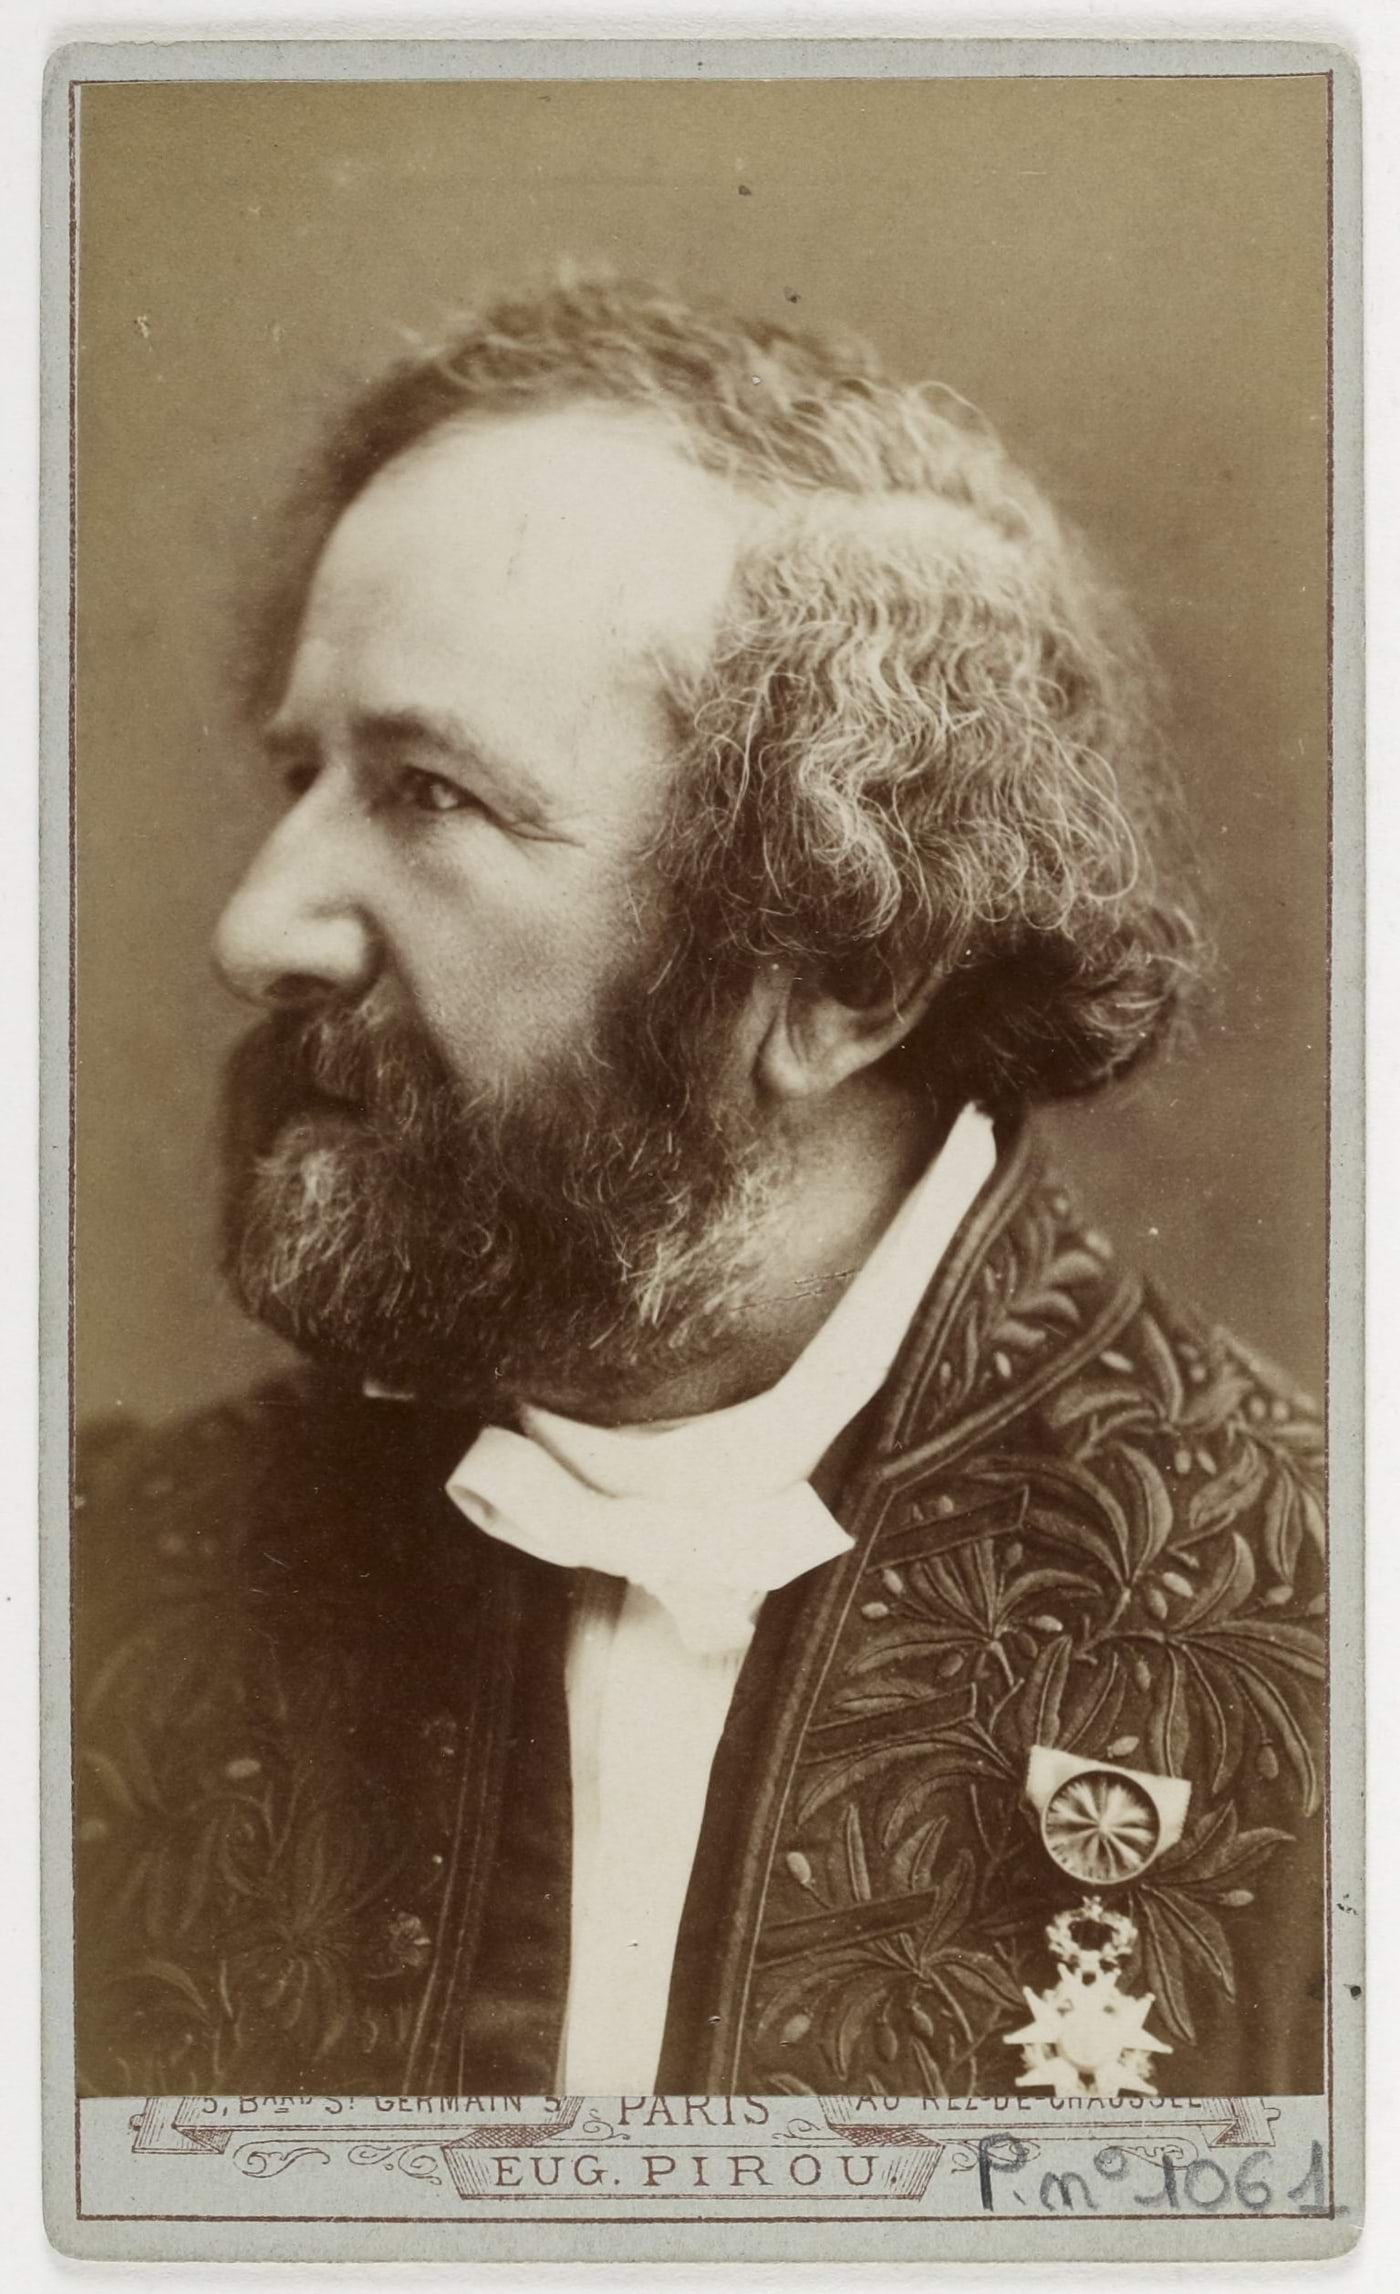 Hippolyte Fizeau